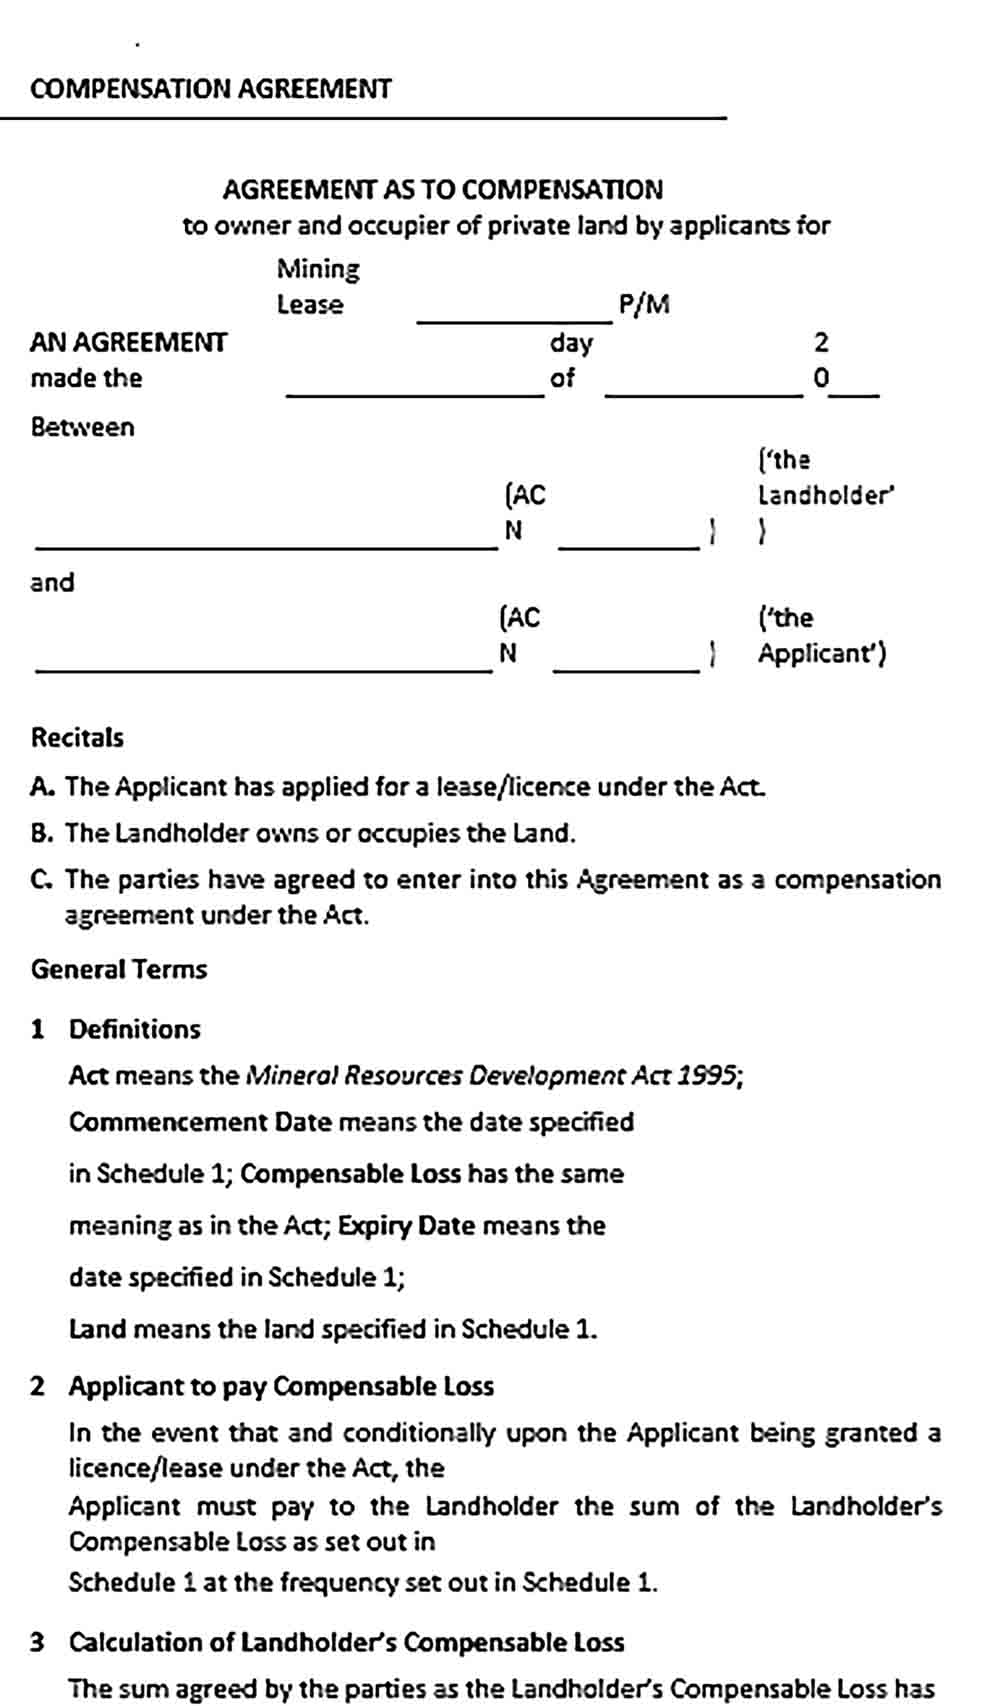 Sample compensation agreement 2014